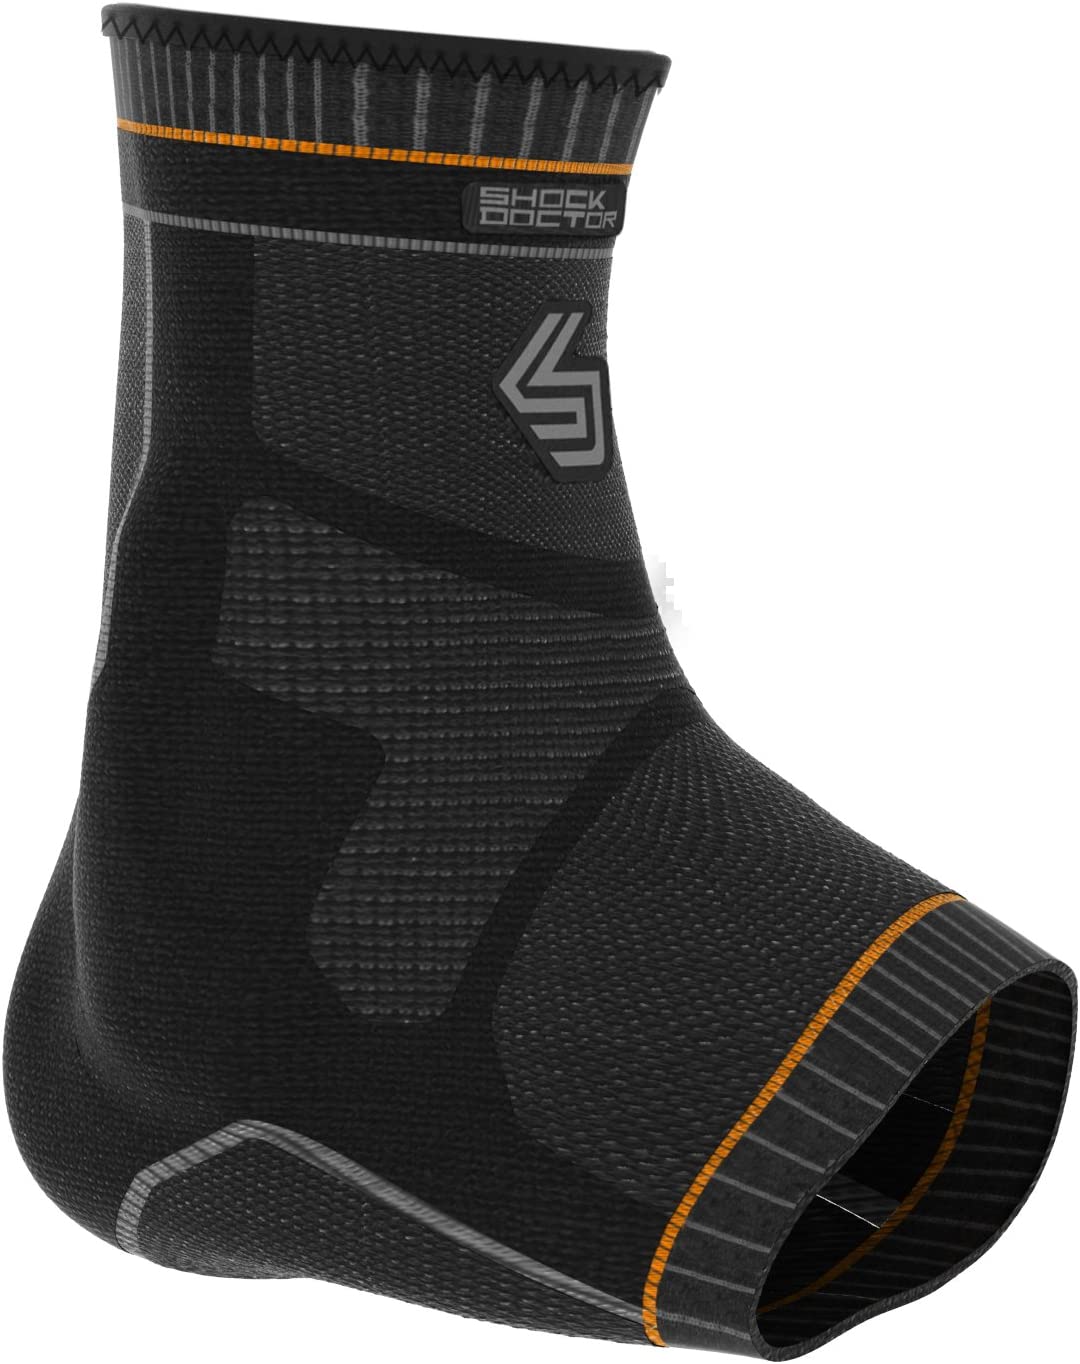 Shock Doctor Ultra Compression Knit Ankle Support w/Gel Support Black / Grey Large